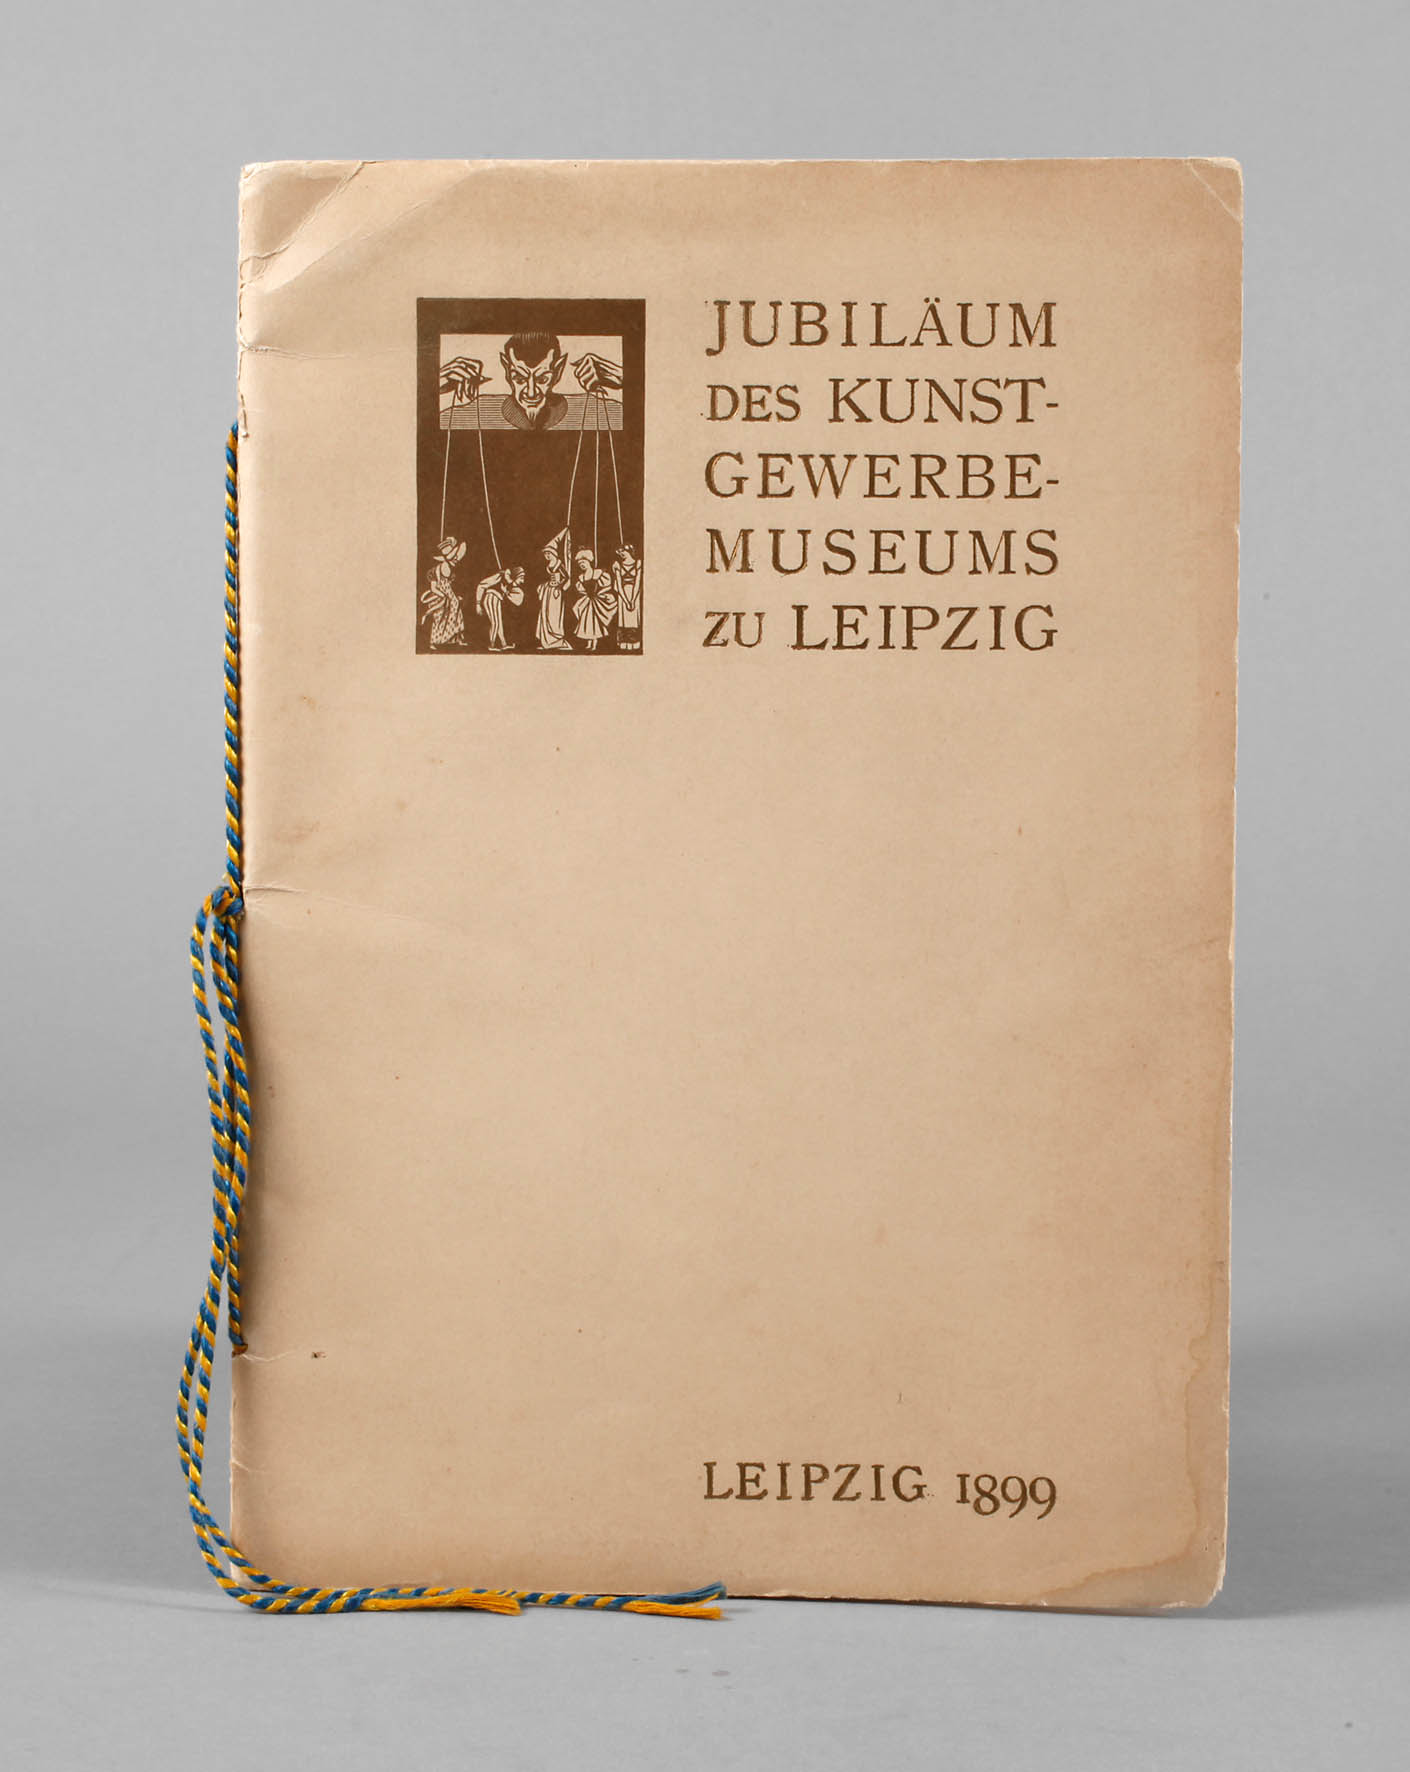 Jubiläum des Kunstgewerbemuseum Leipzig 1899